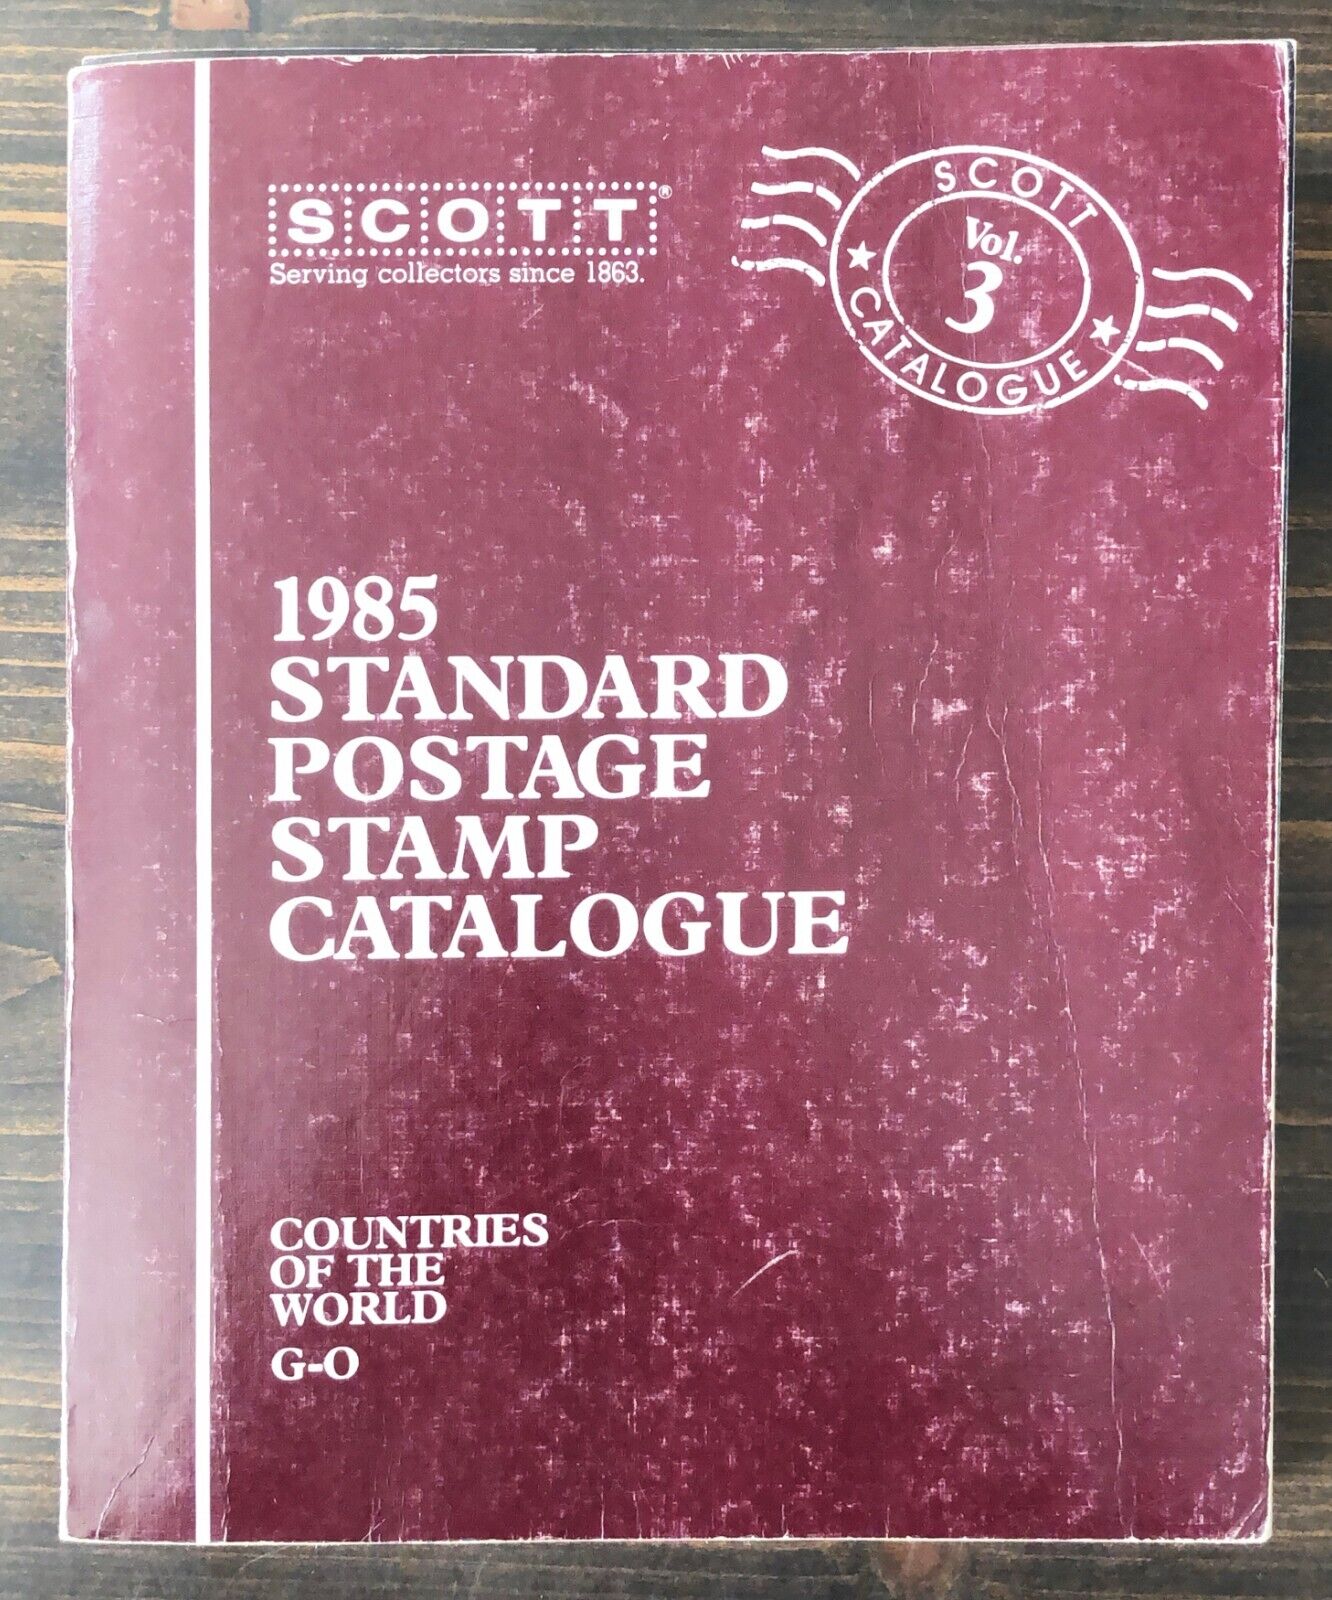 Scott Standard Postage Stamp Catalogue 1985 Vol 3